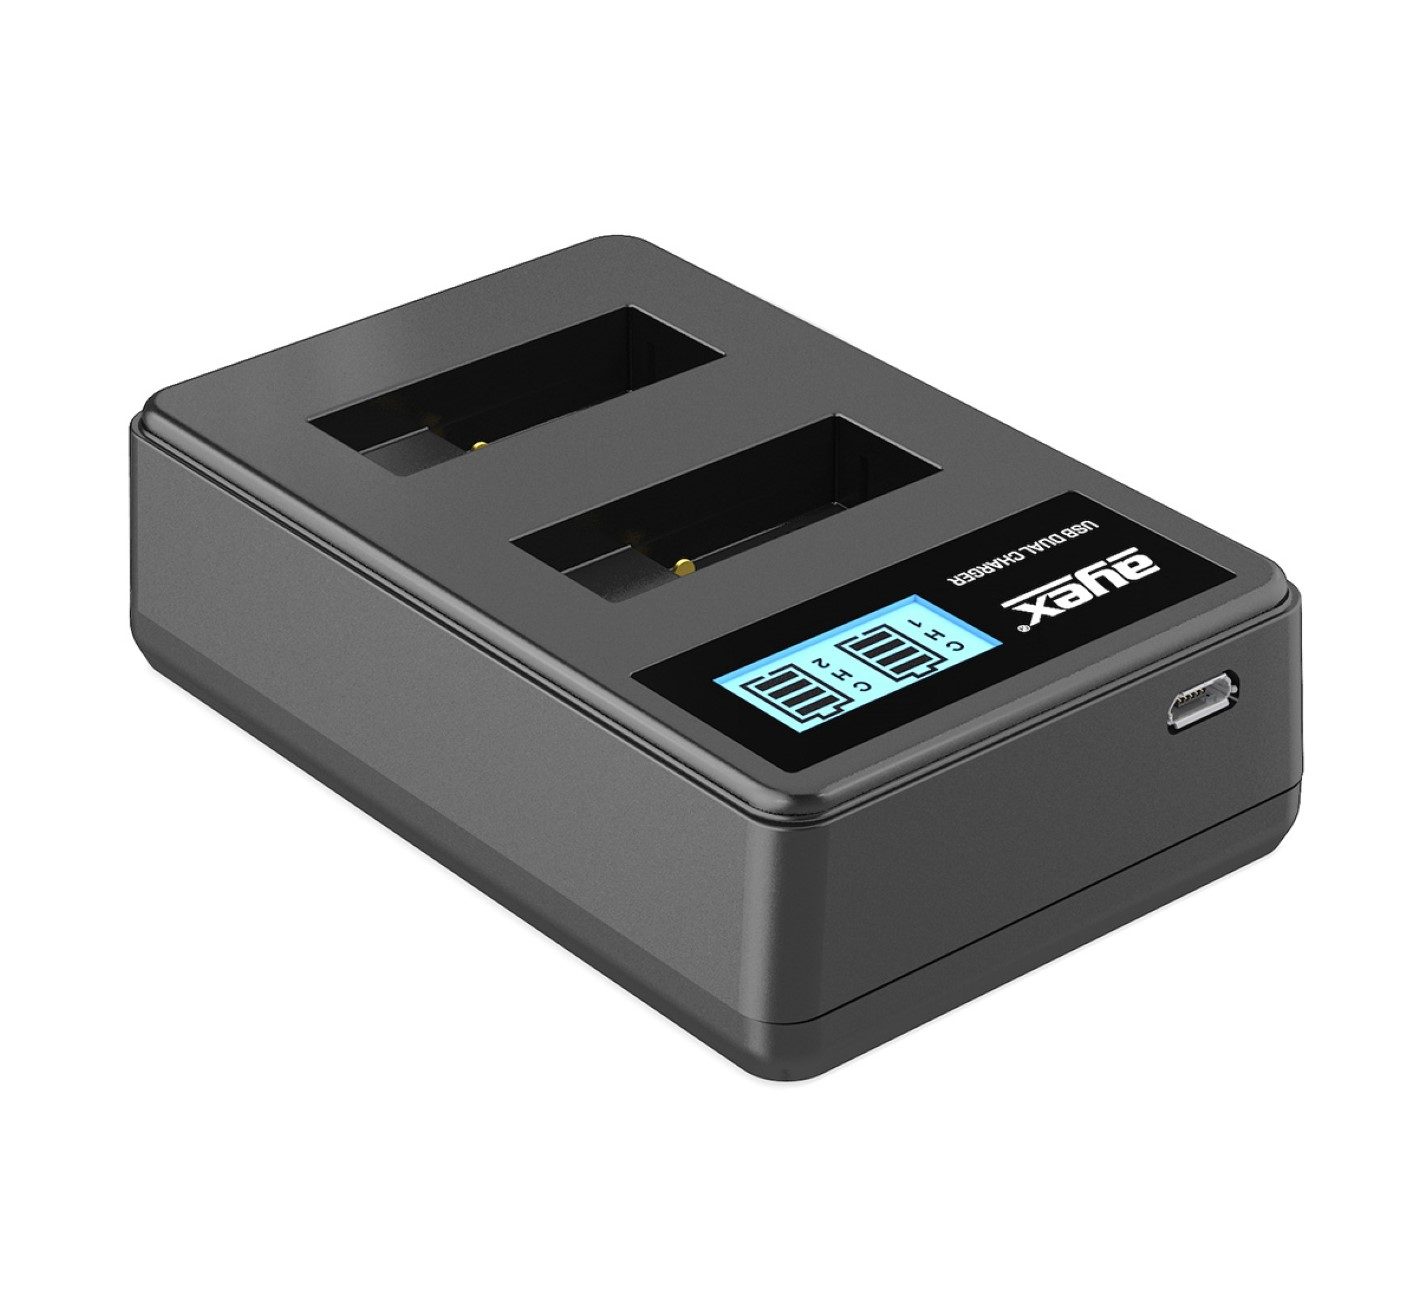 Dual Lader, GoPro 7 AYEX Akkus GoPro Ladegerät für für 6 Black AHDBT-501 USB Kamera-Akku Hero Black Silver, 5 8